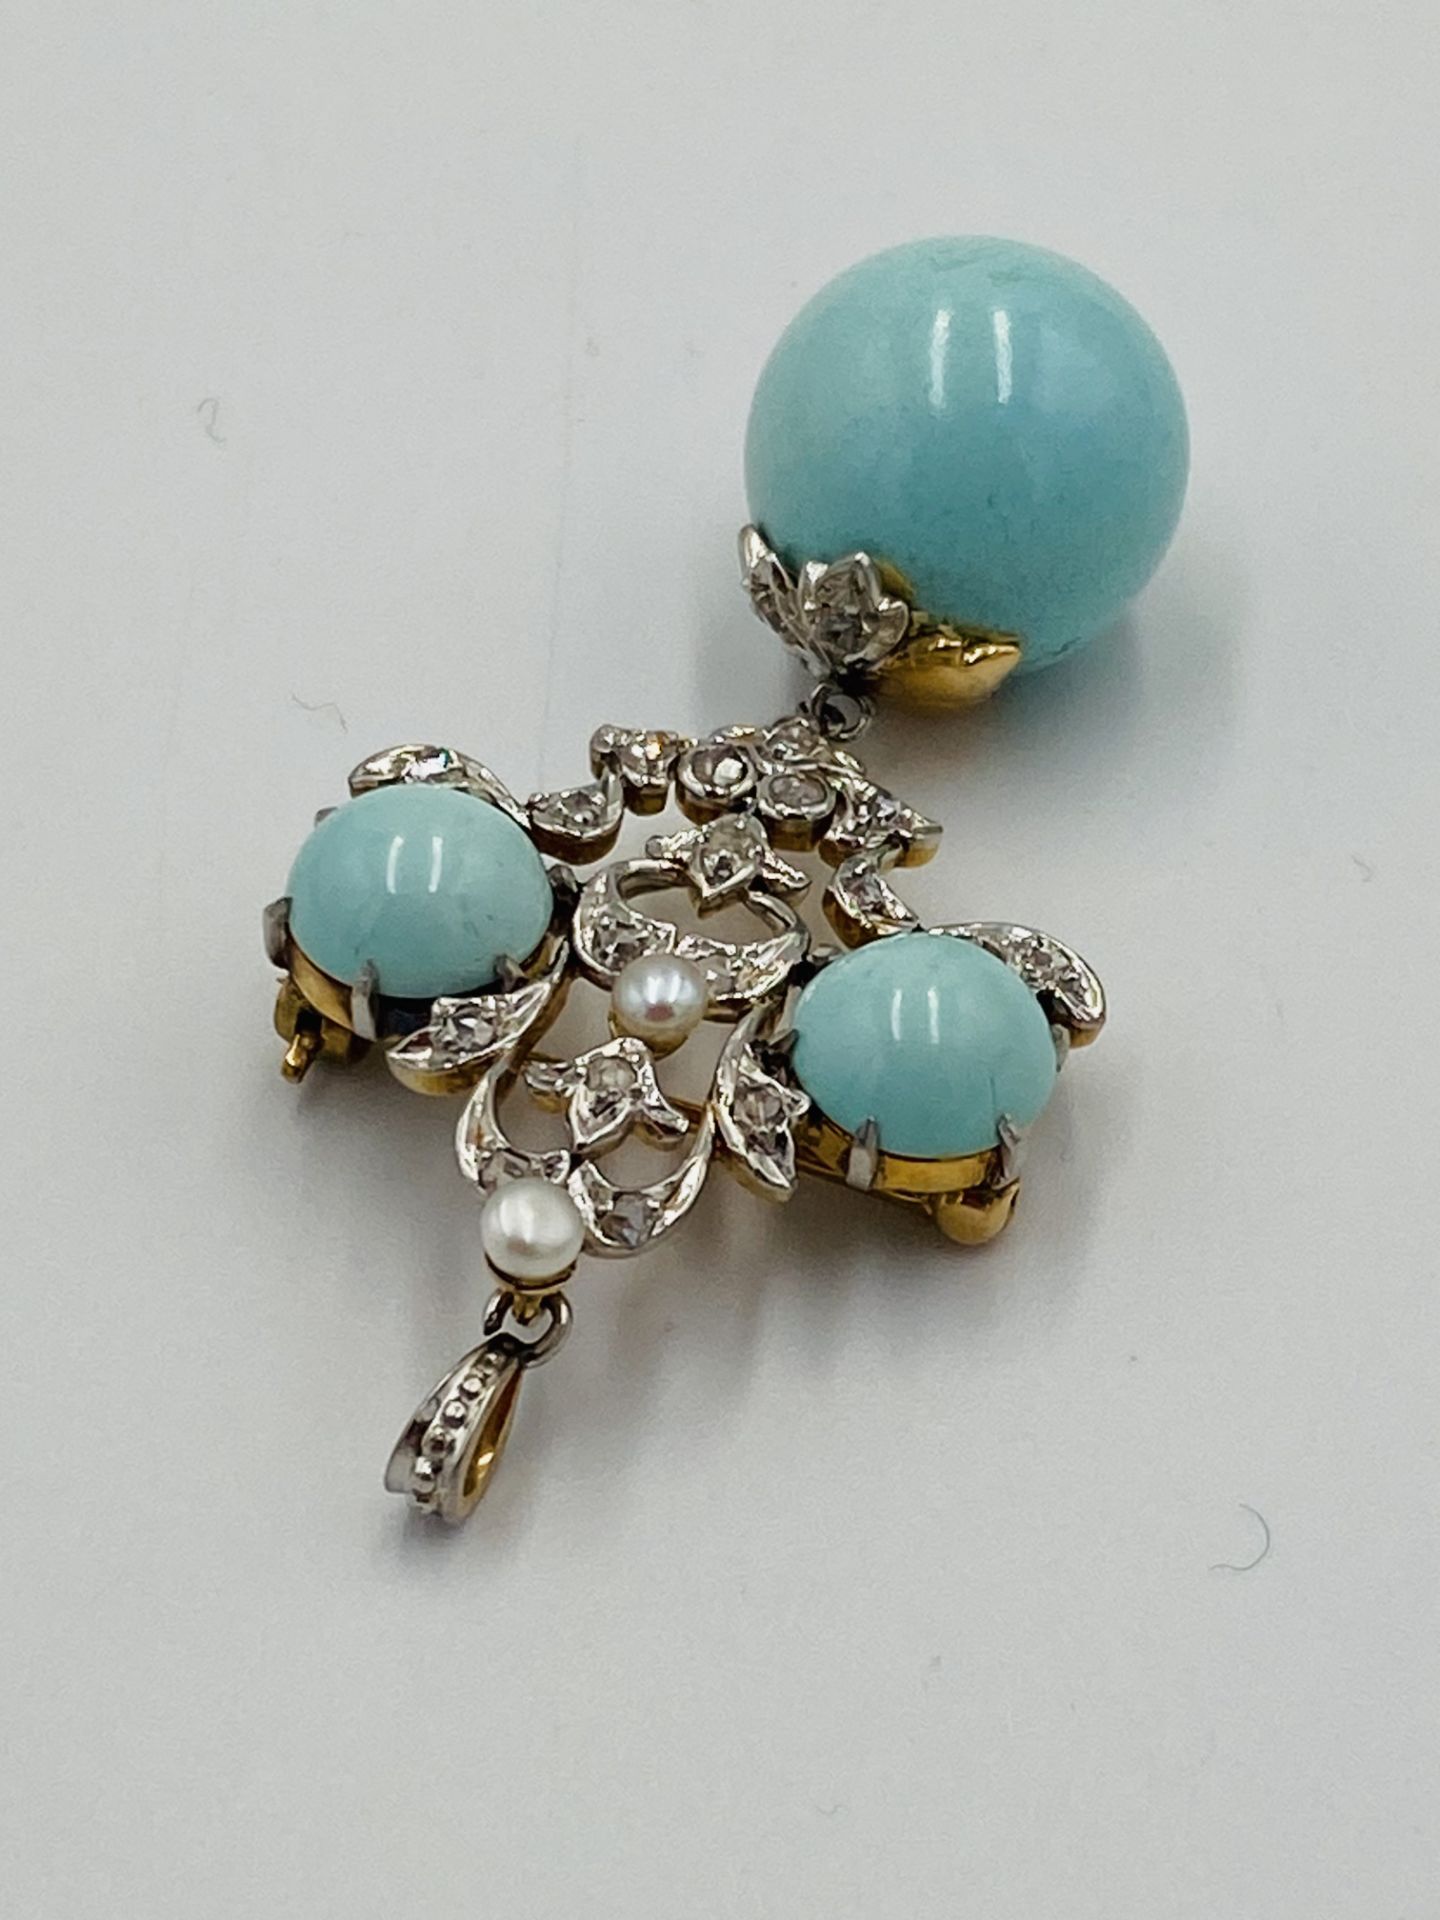 Turquoise and diamond brooch/pendant